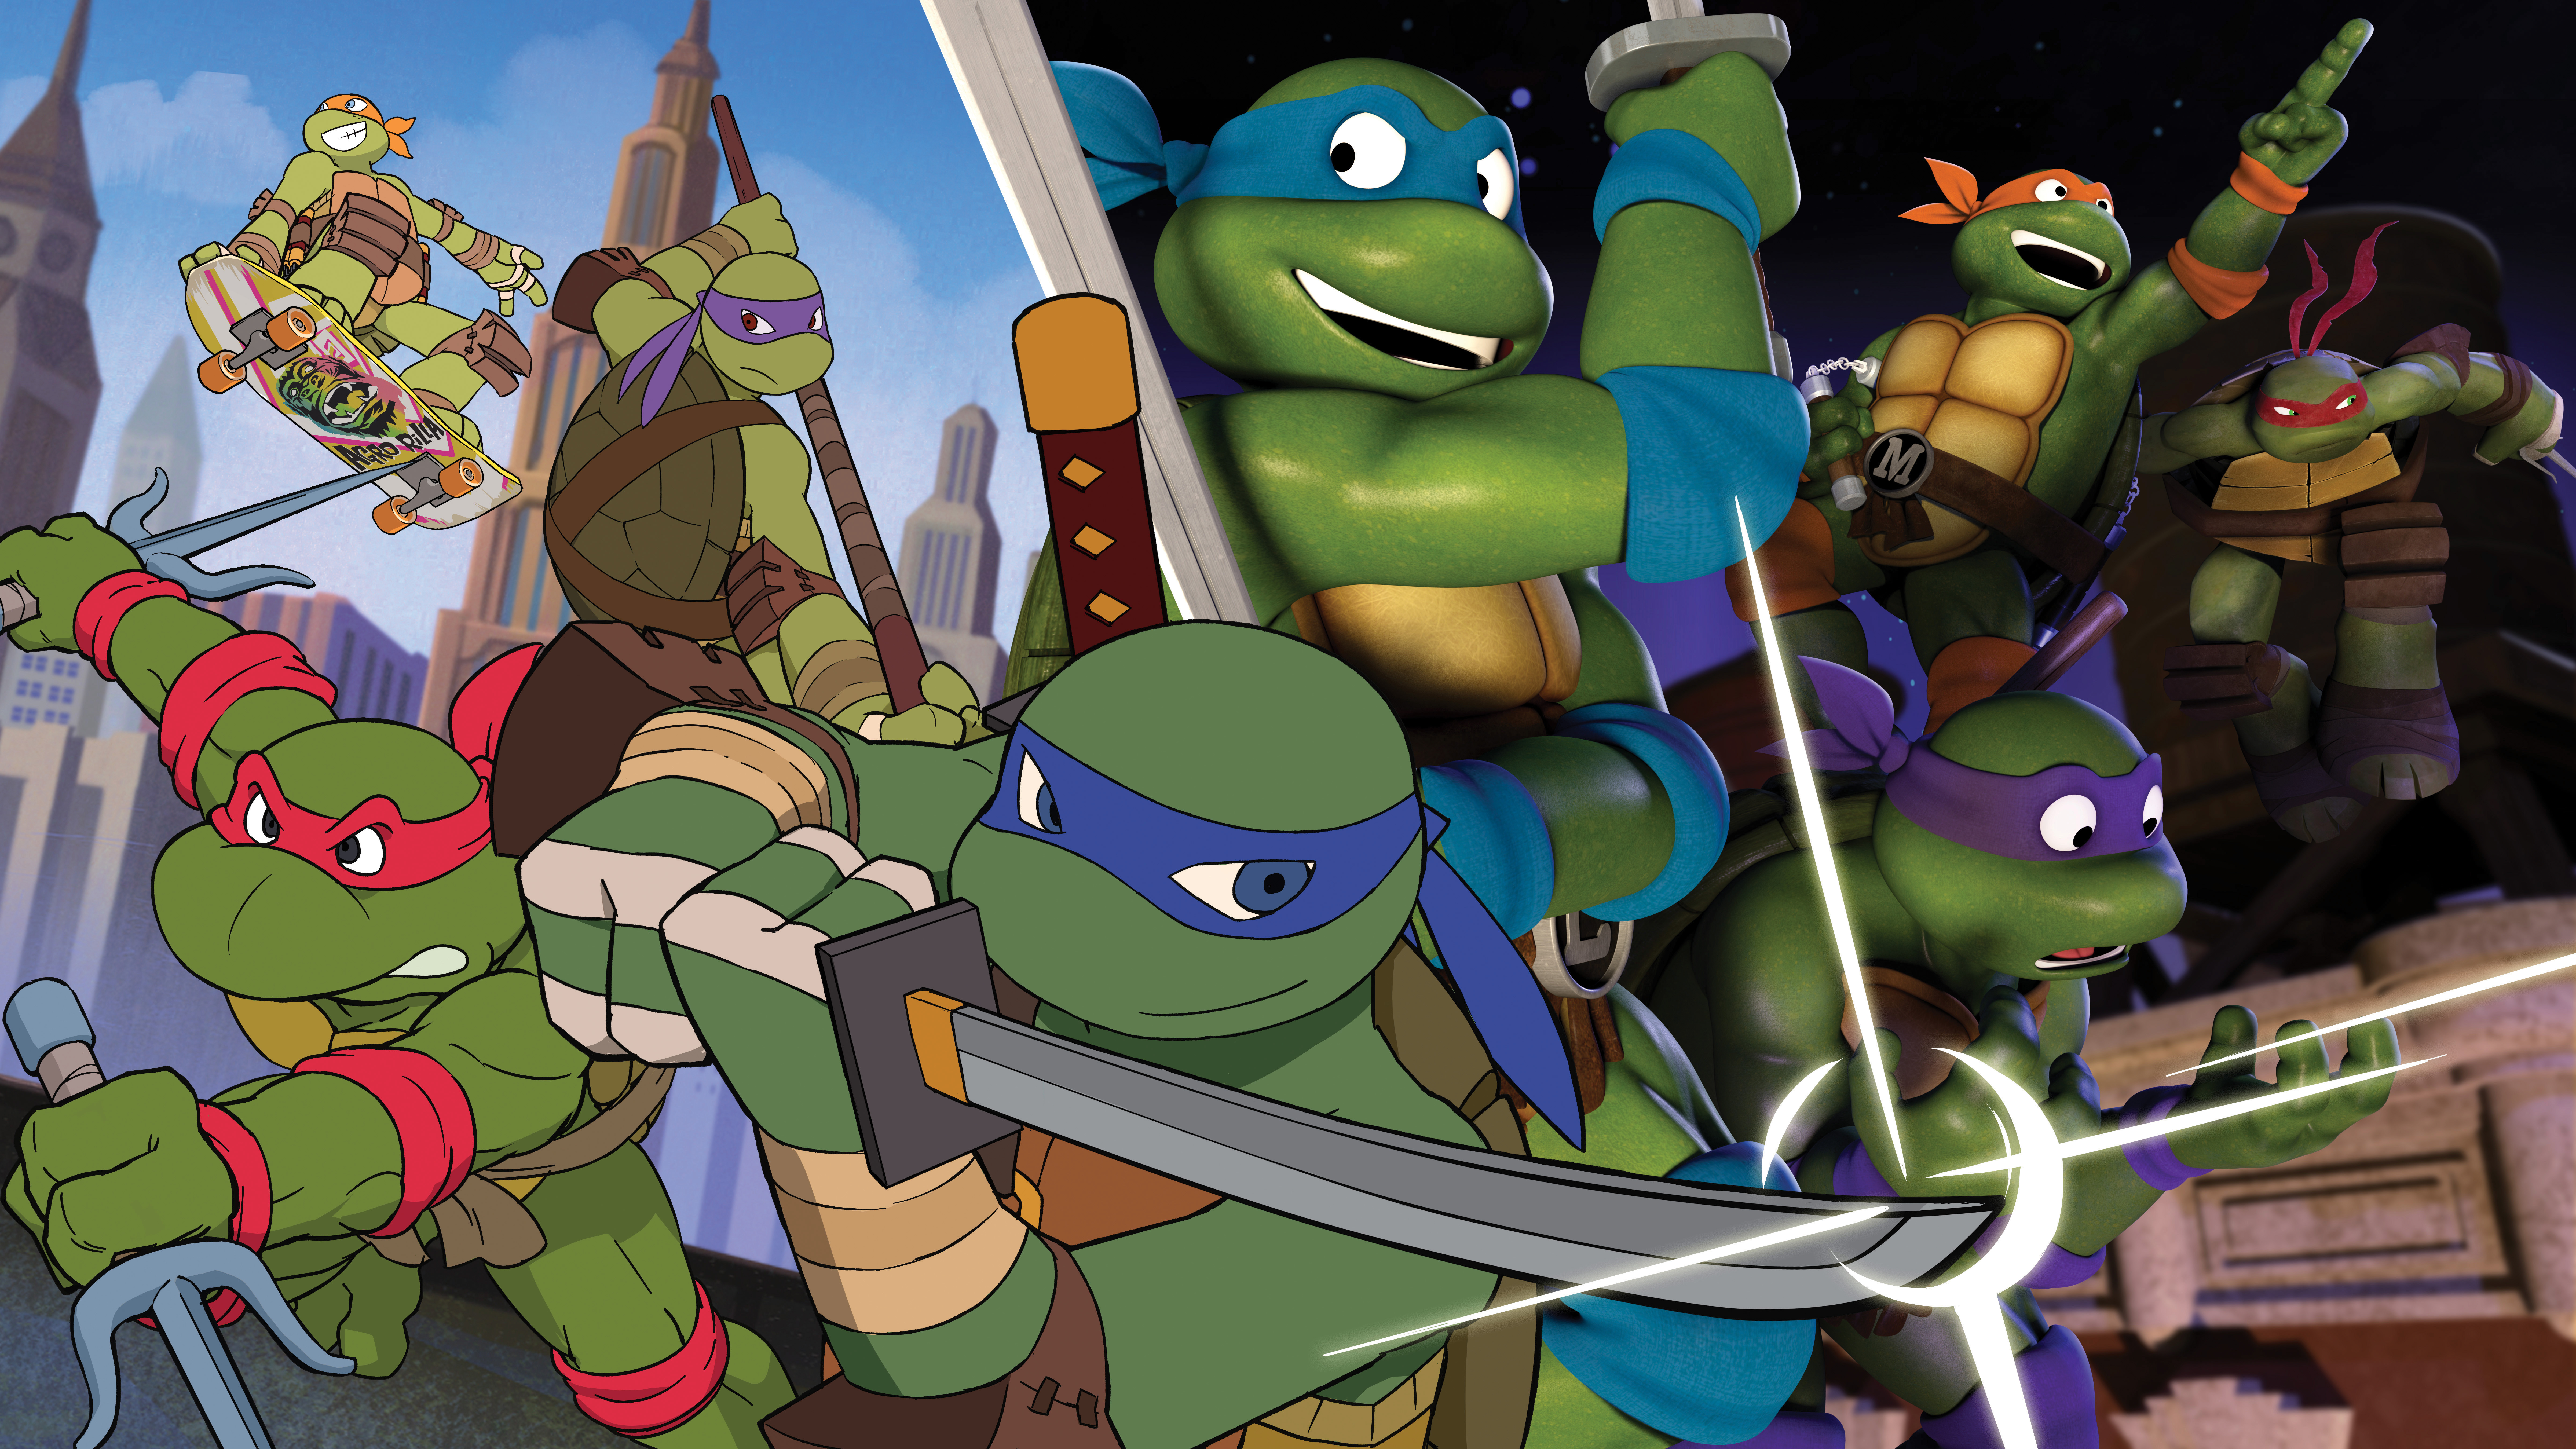 Nickelodeon's Teenage Mutant Ninja Turtles Reunites Original 1980S Turtles Krang in Epic Time-Travelling Episode, Sunday, March 27, 11 A.M. (ET/PT) | Business Wire